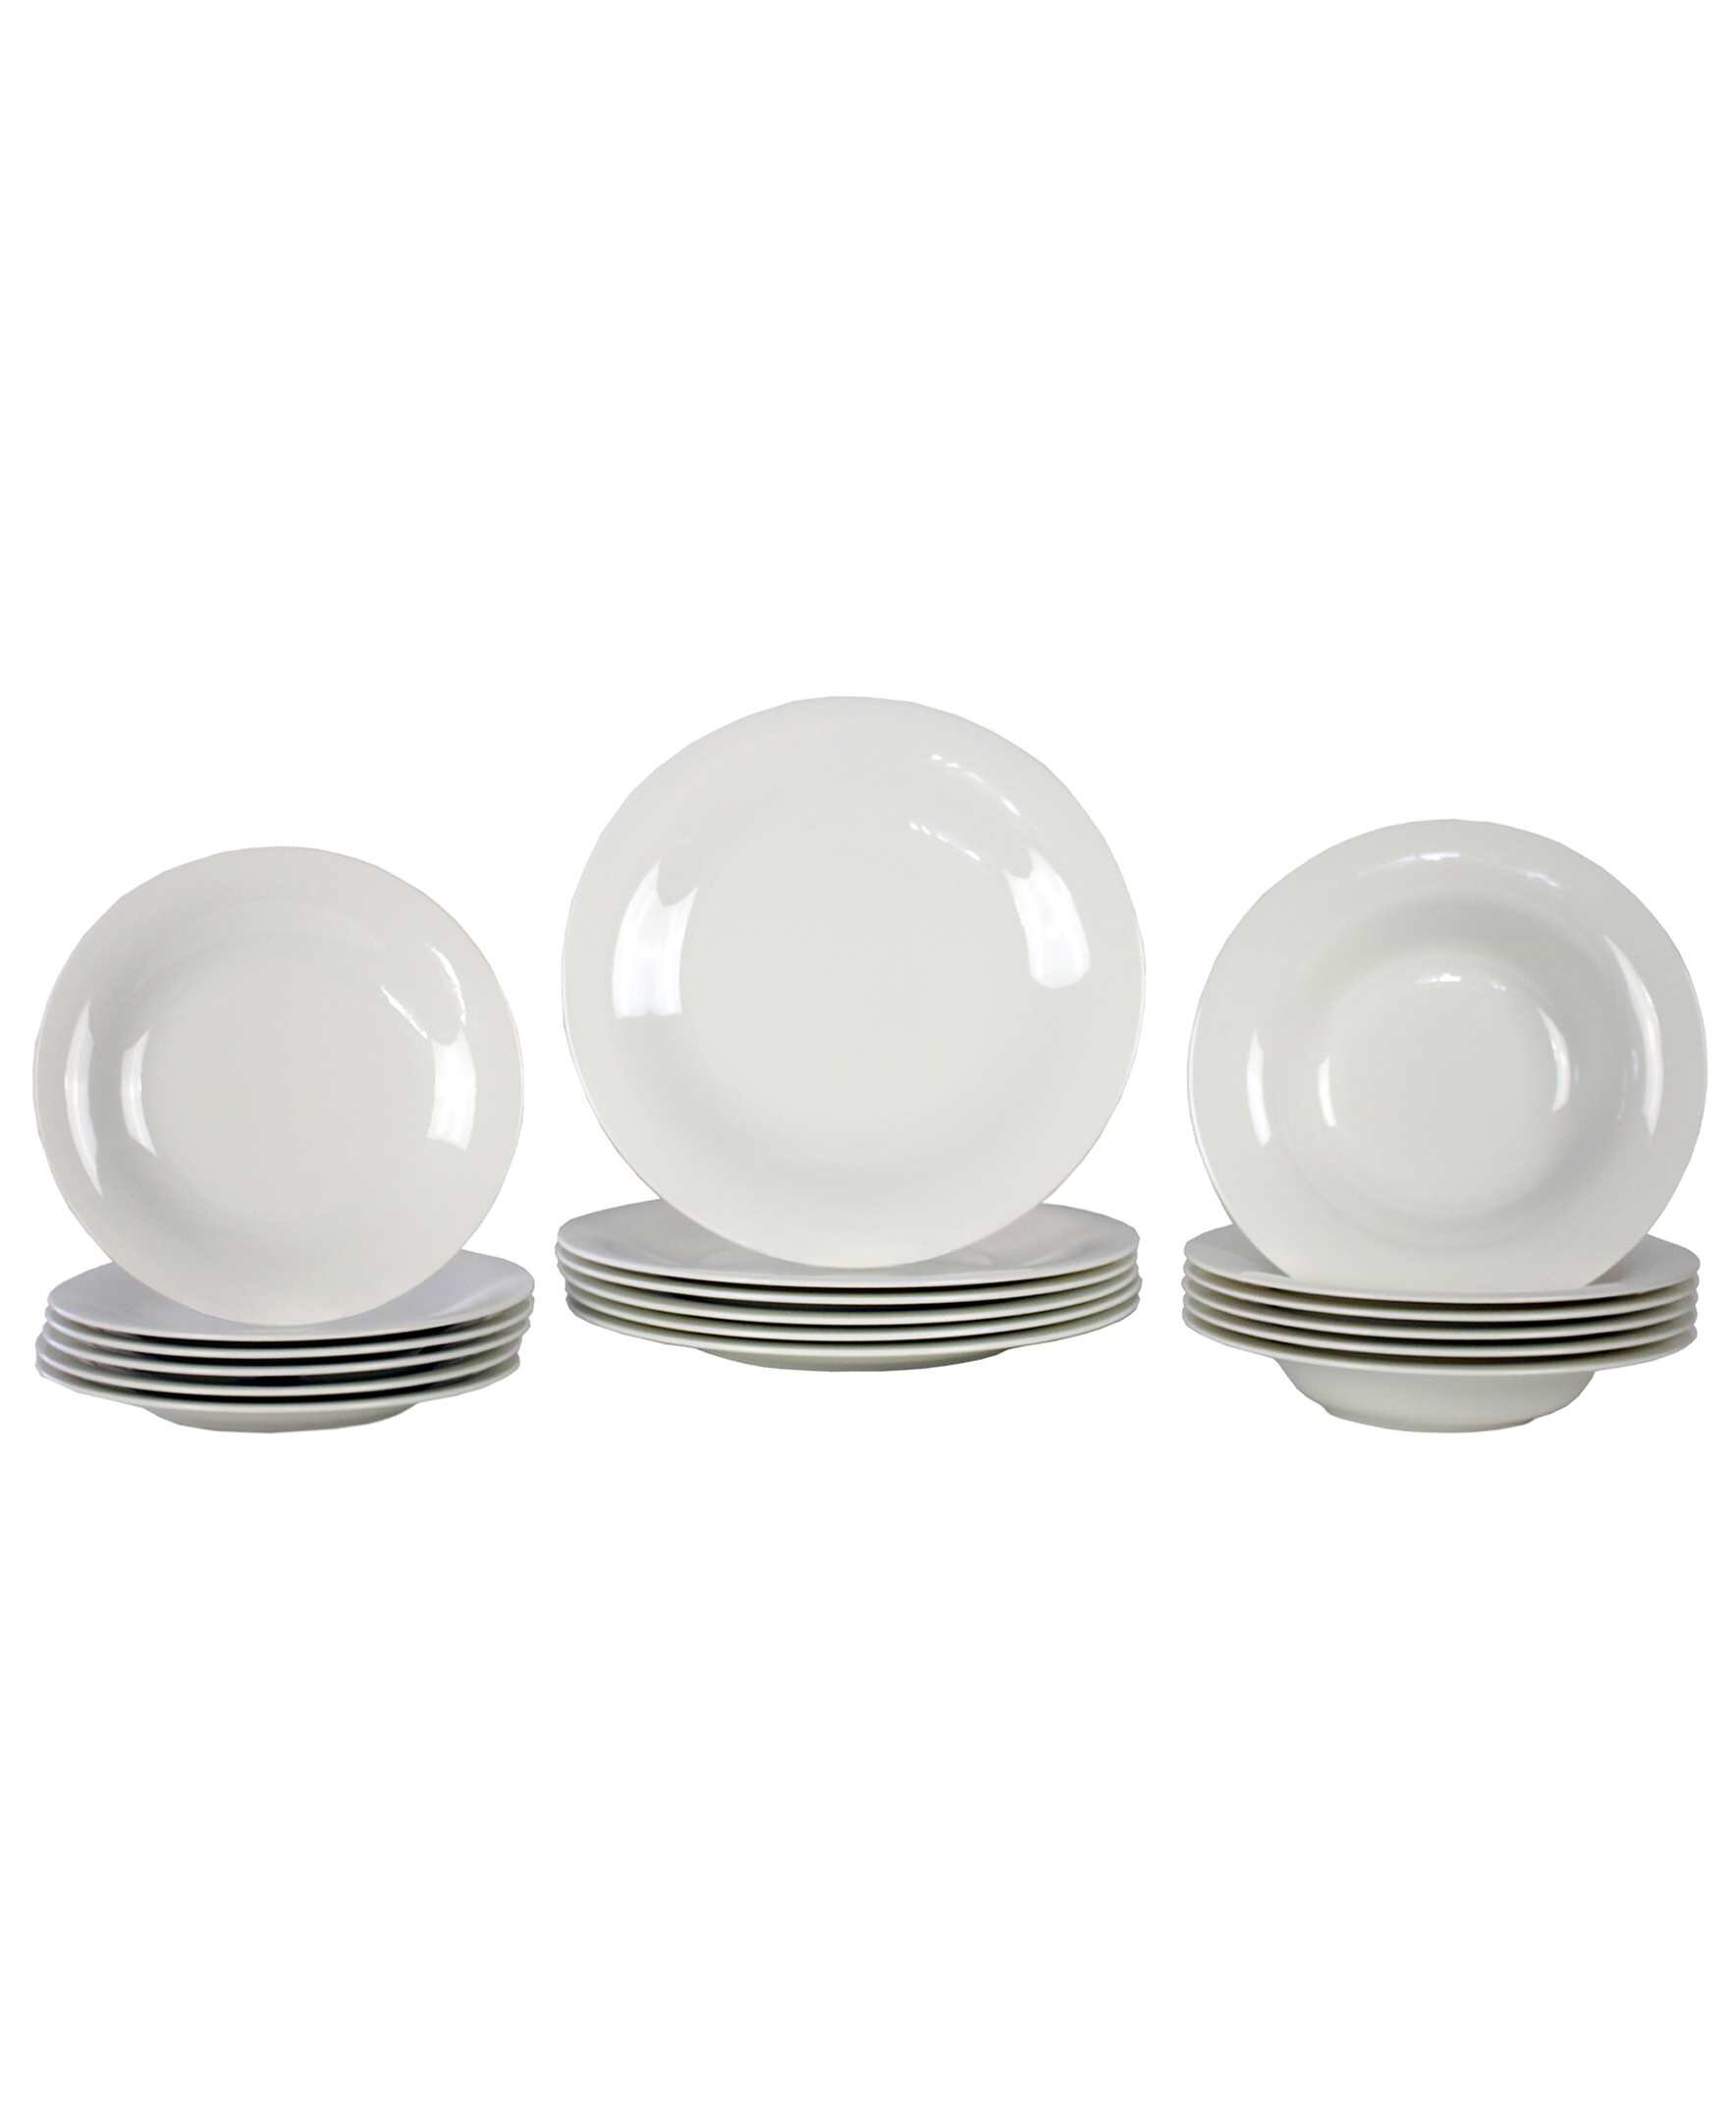 & Boch New Cottage Porcelain China Dinnerware Set - Service for 6 & | Wayfair